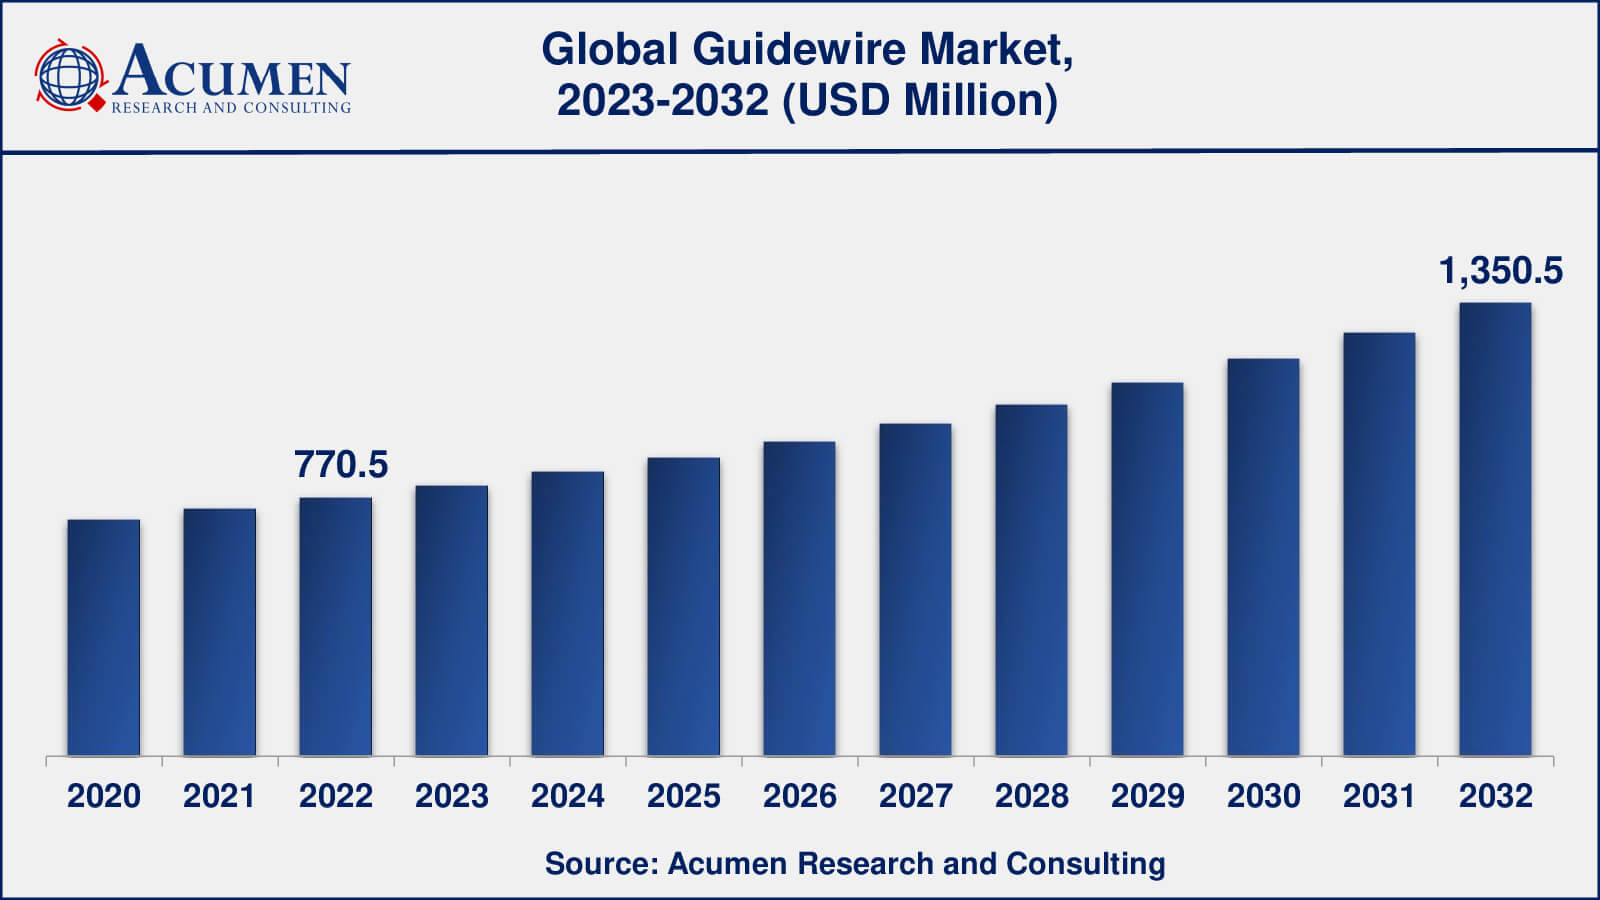 Global Guidewire Market Dynamics